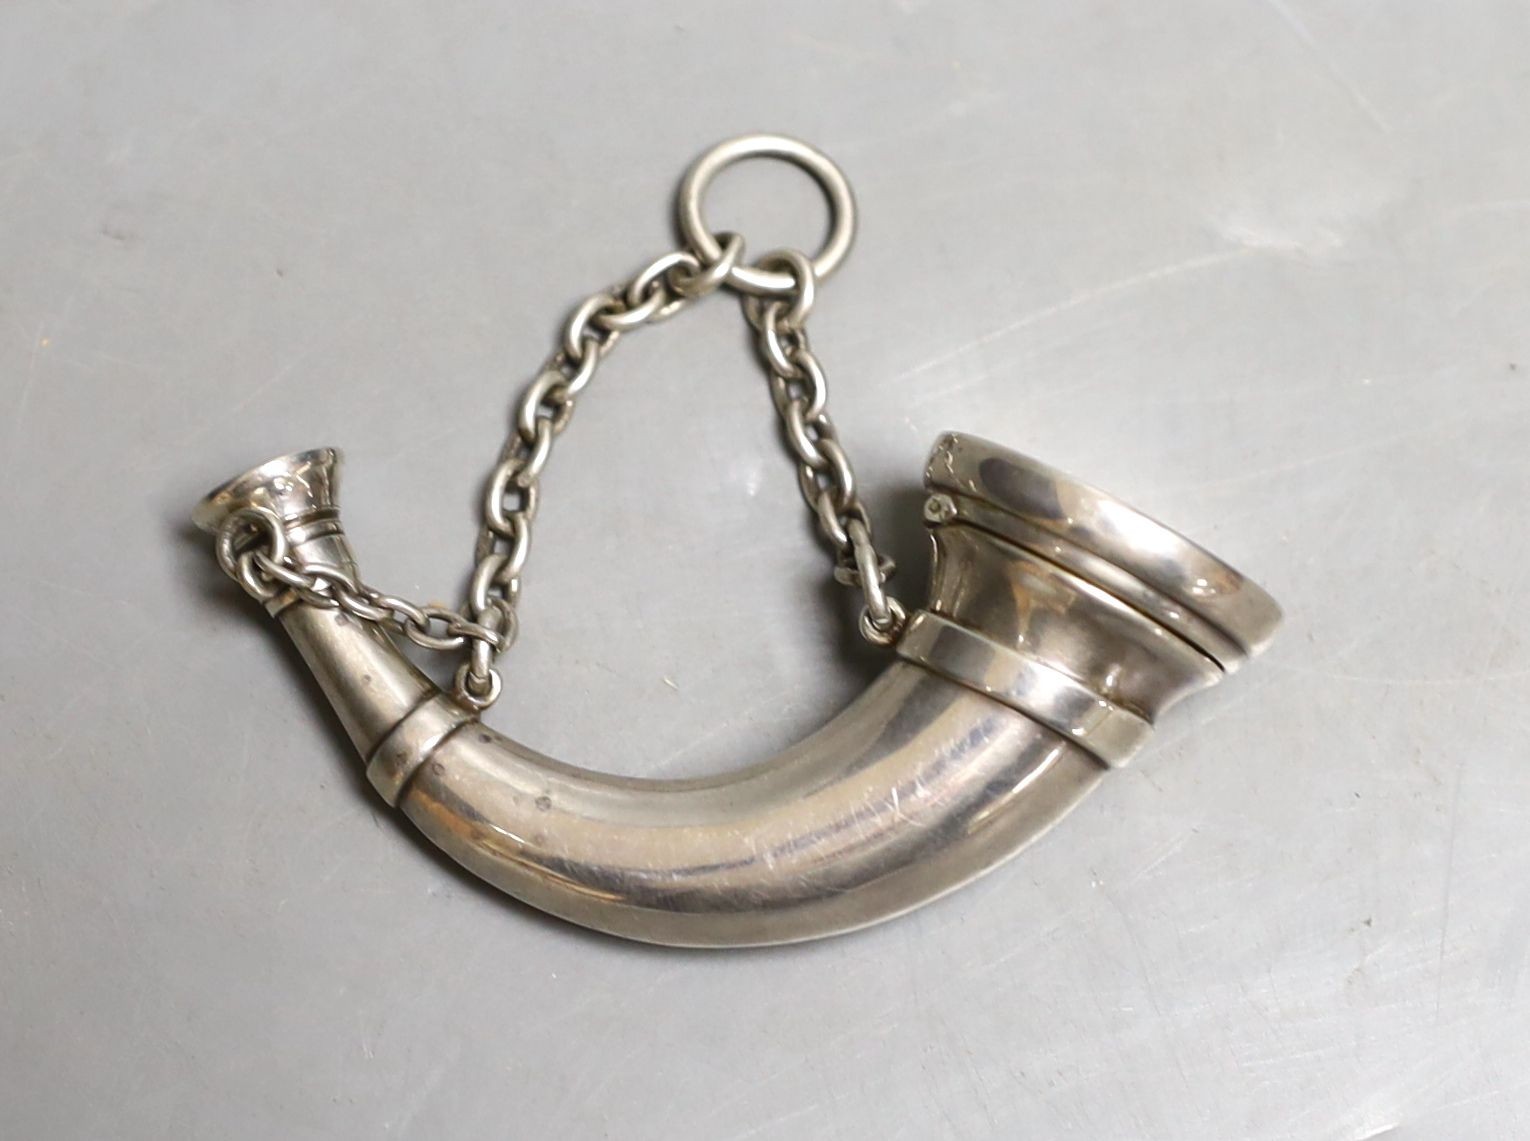 A Victorian novelty silver vinaigrette, modelled as a hunting horn, Sampson Mordan & Co, London, 1873, 76mm.